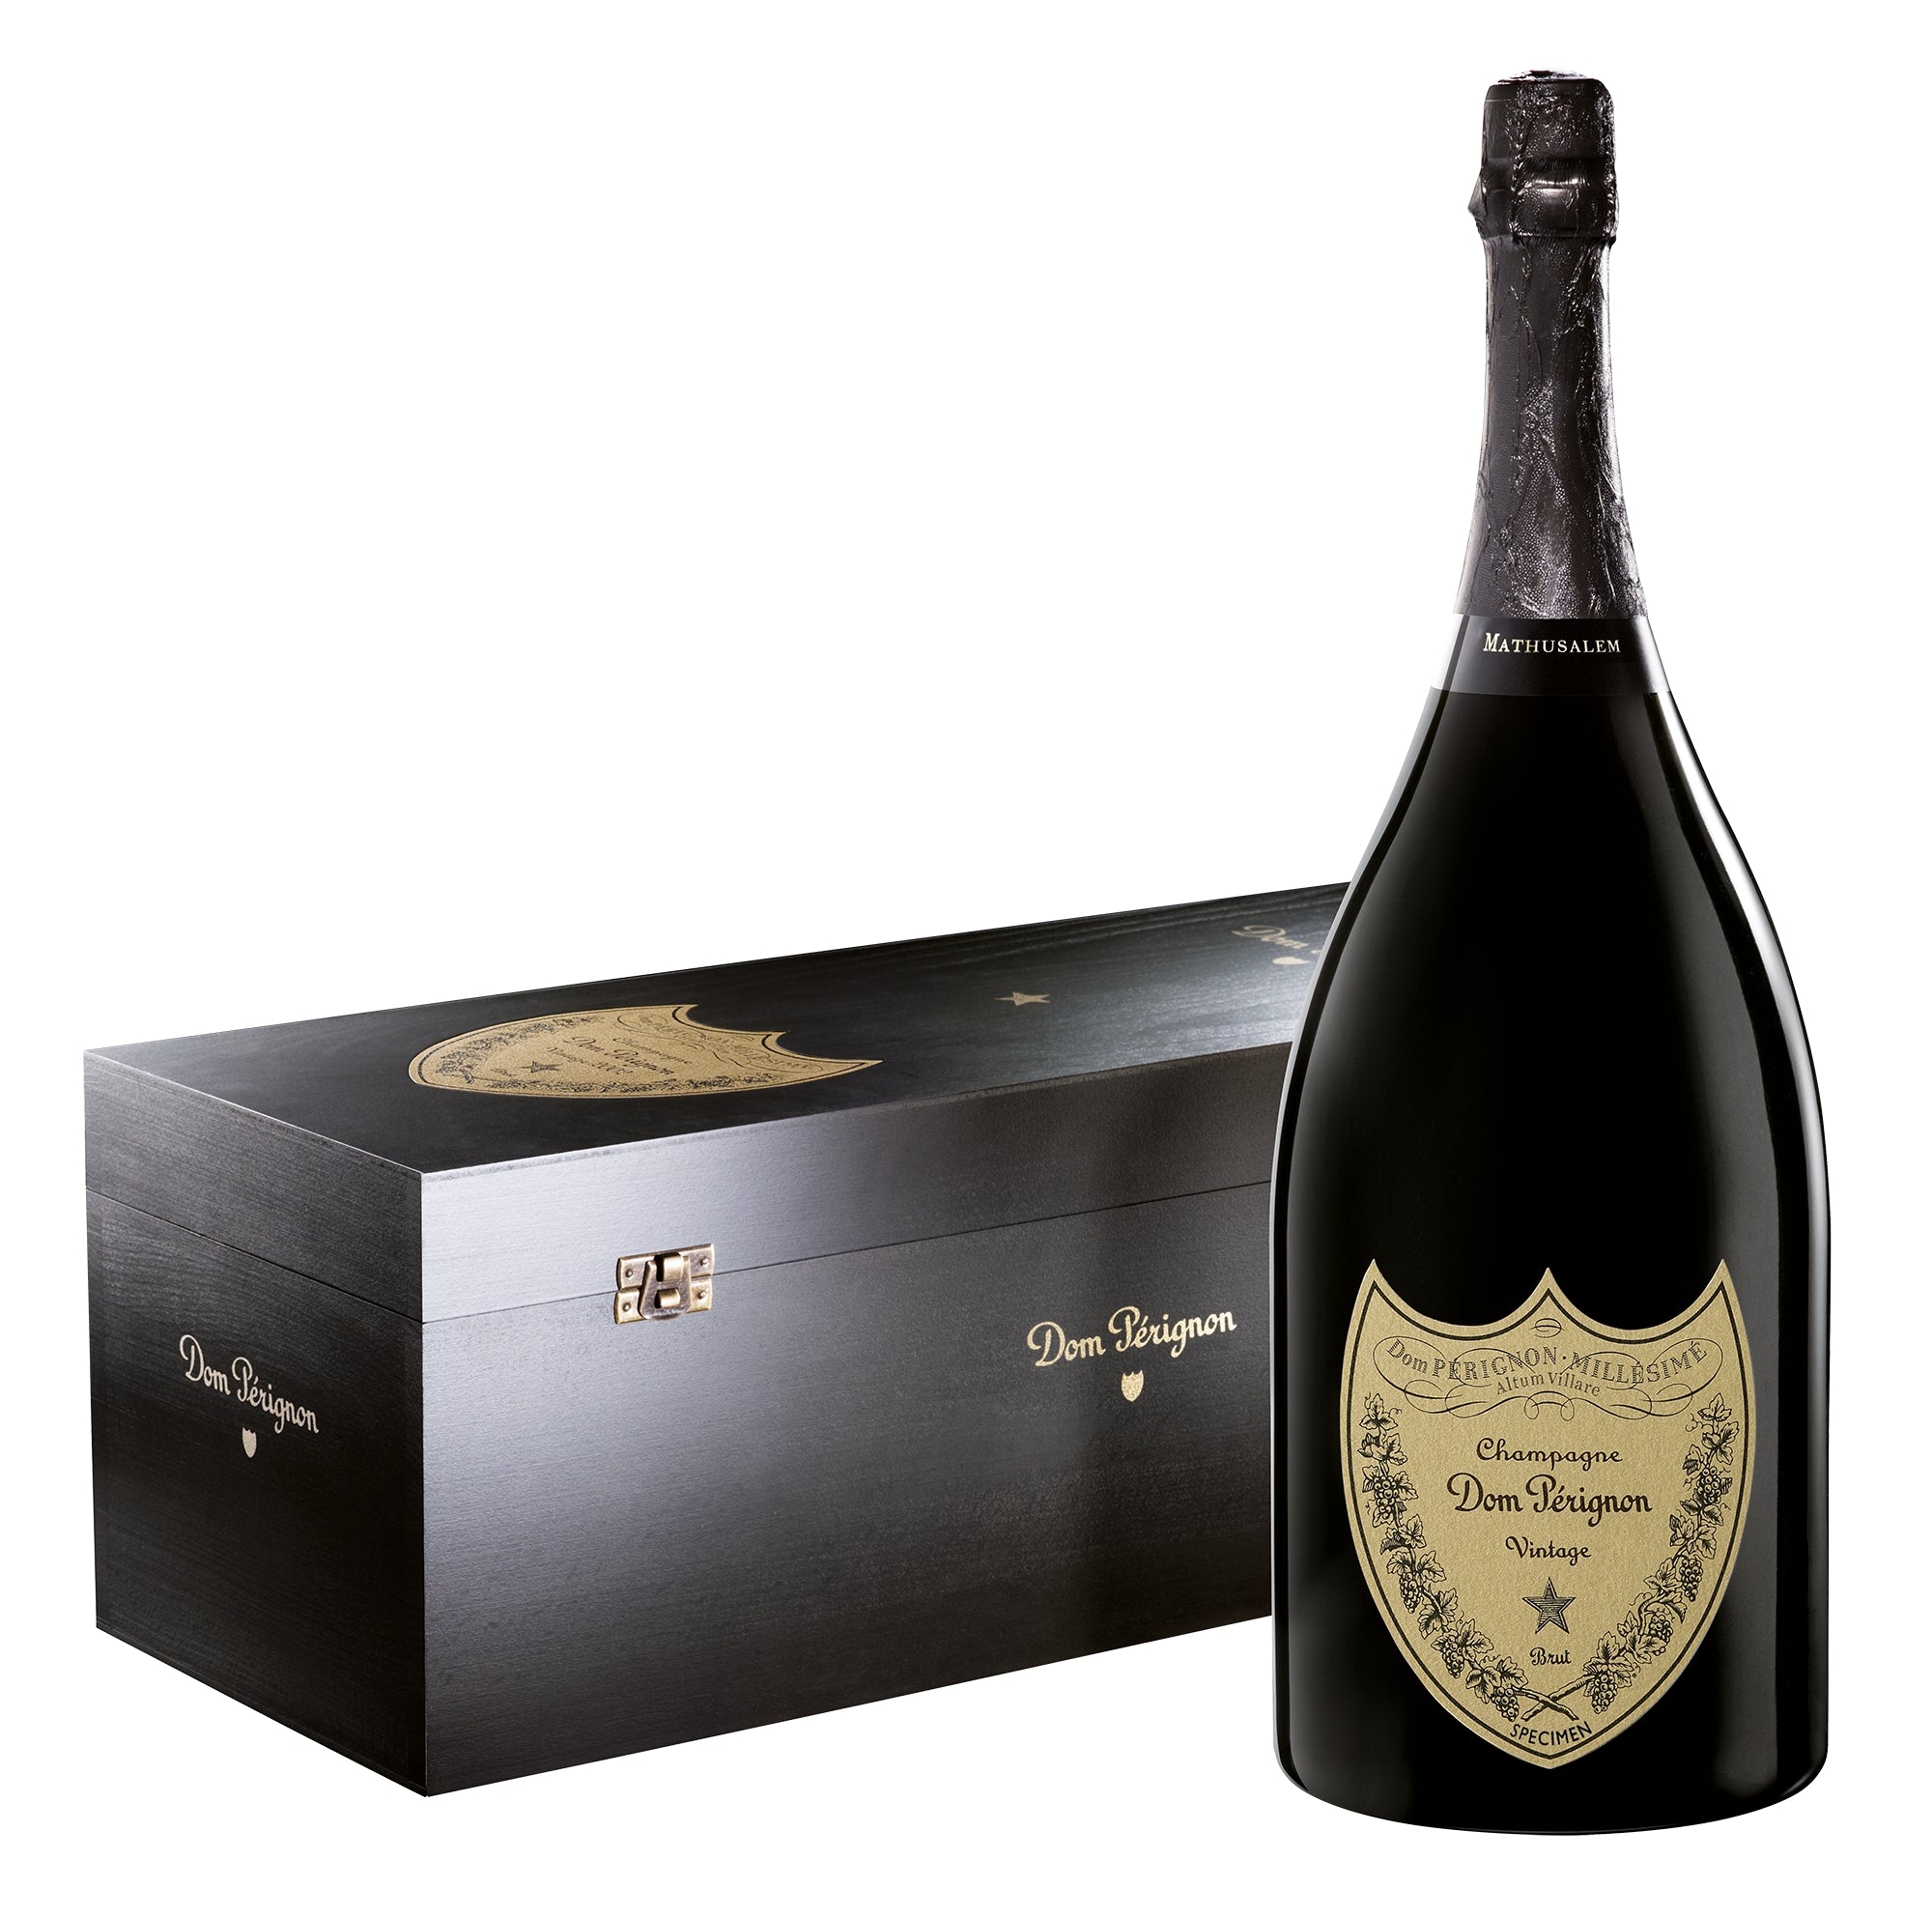 Wine 2013 Dom Perignon – Spirits Hills & Champagne